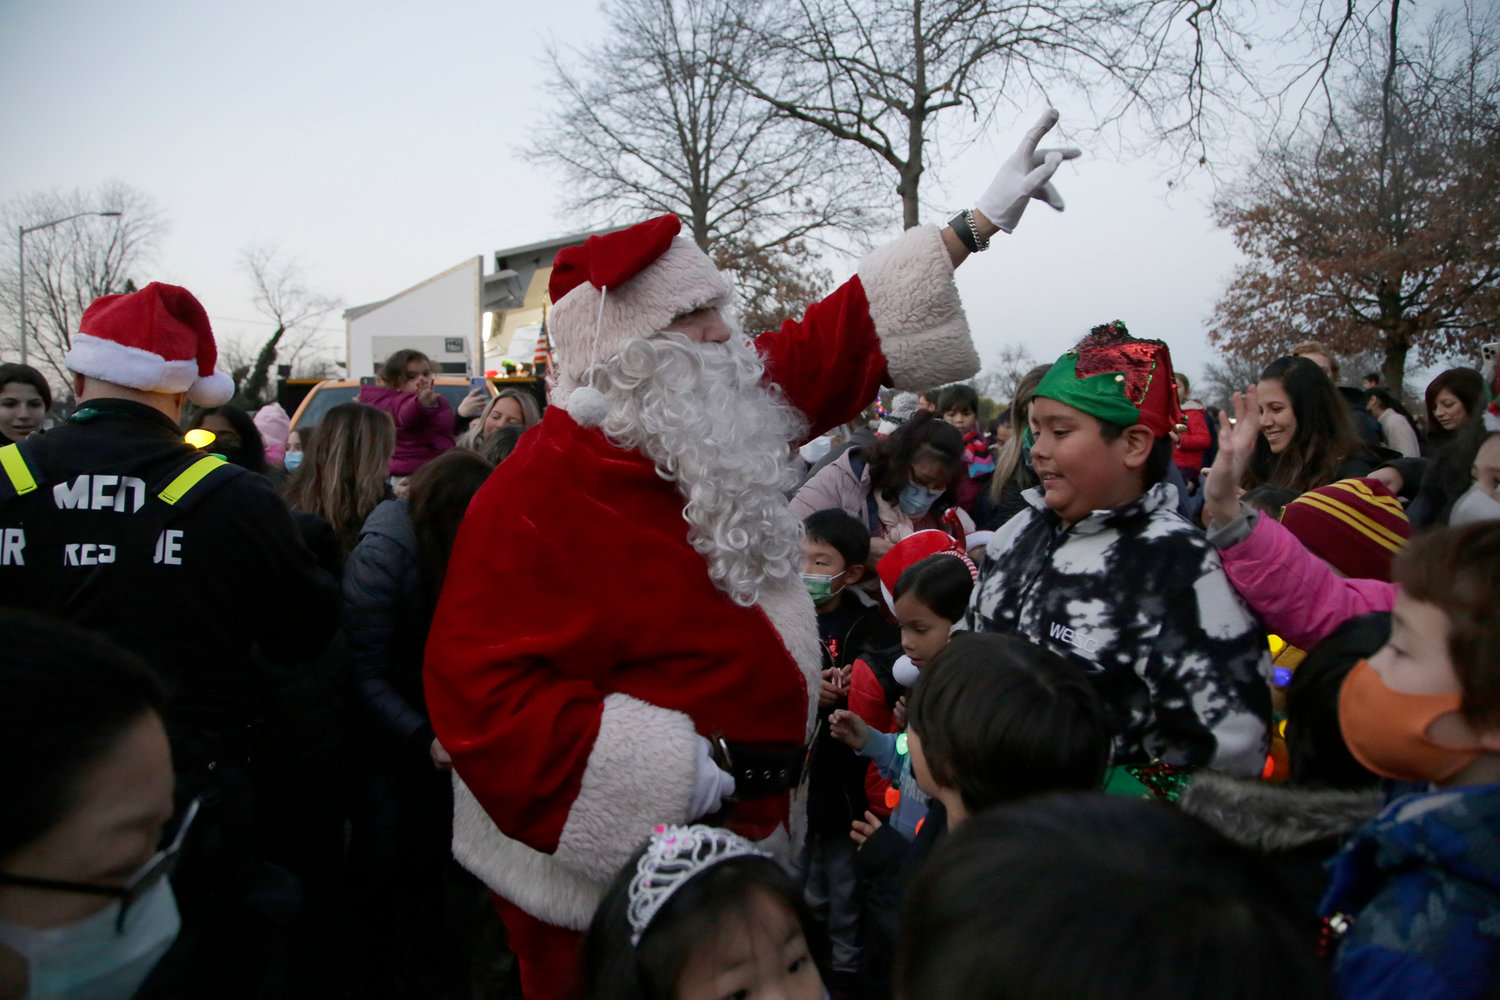 When Santa arrived, jubilant children surrounded him.